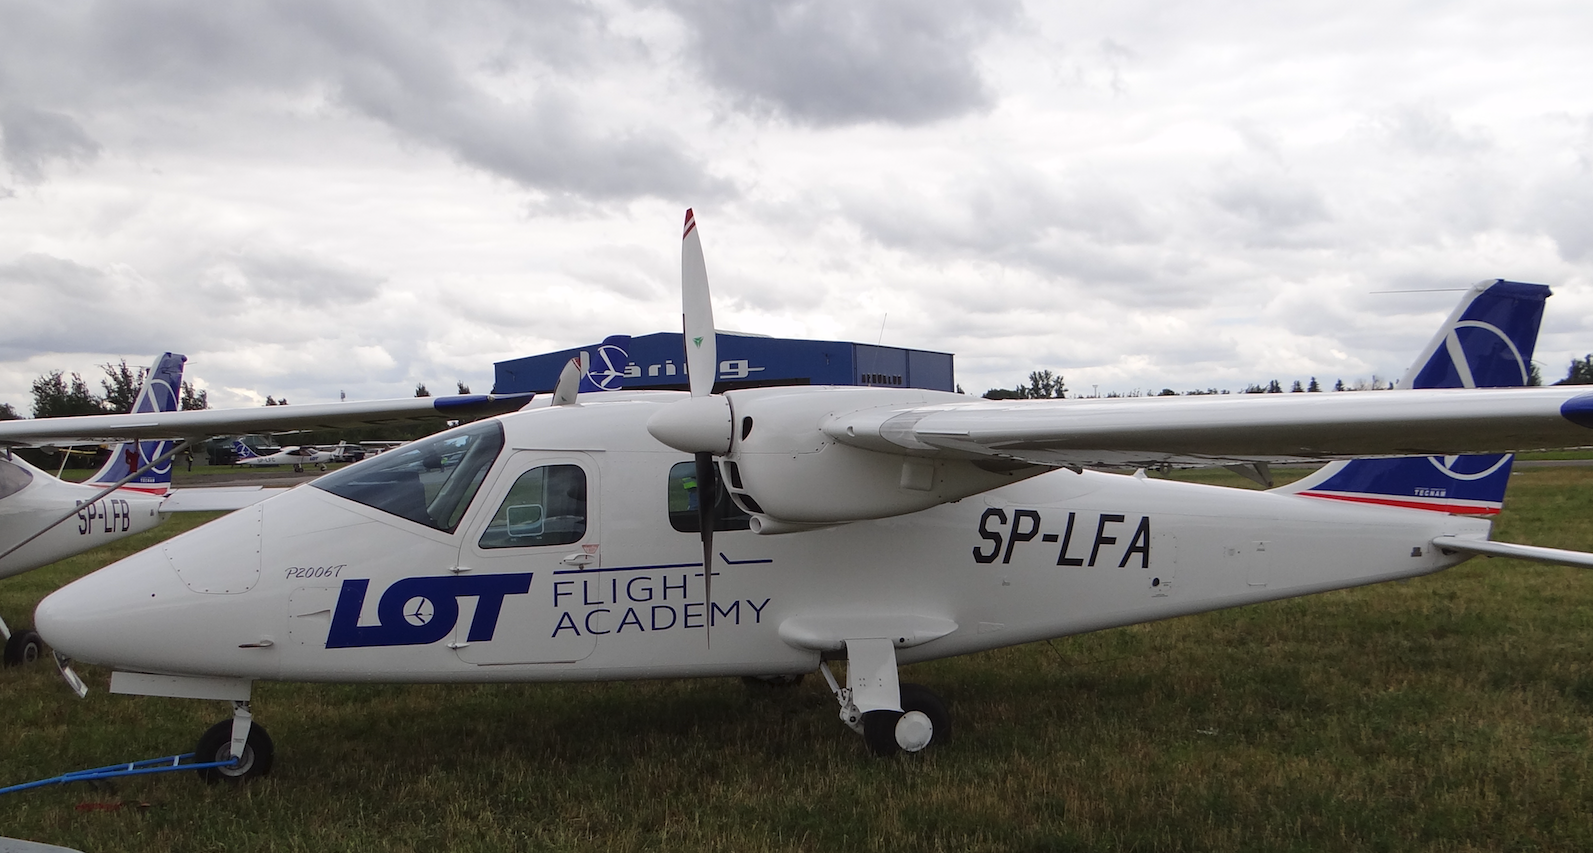 Samolot szkolny PLL LOT Tecnam P2006T SP-LFA. 2018 rok. Zdjęcie Karol Placha Hetman